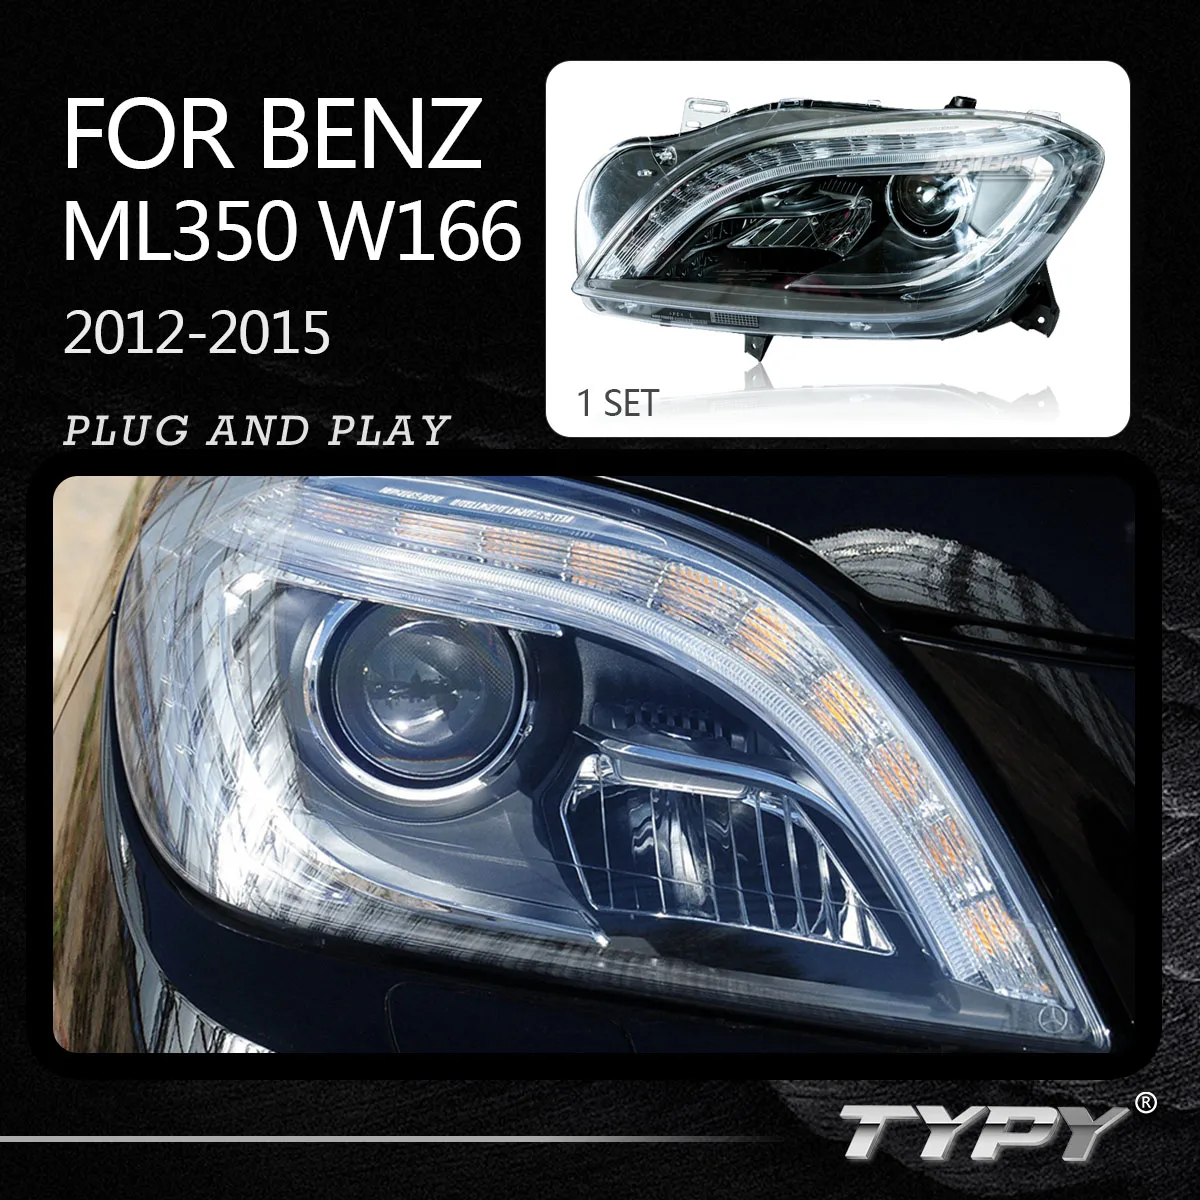 

Car Headlamp Headlights Modified Head Lamp Head Light Halogen Lamp Upgrade Xenon Lamp For Mercedes Benz ML350 W166 2012-2015